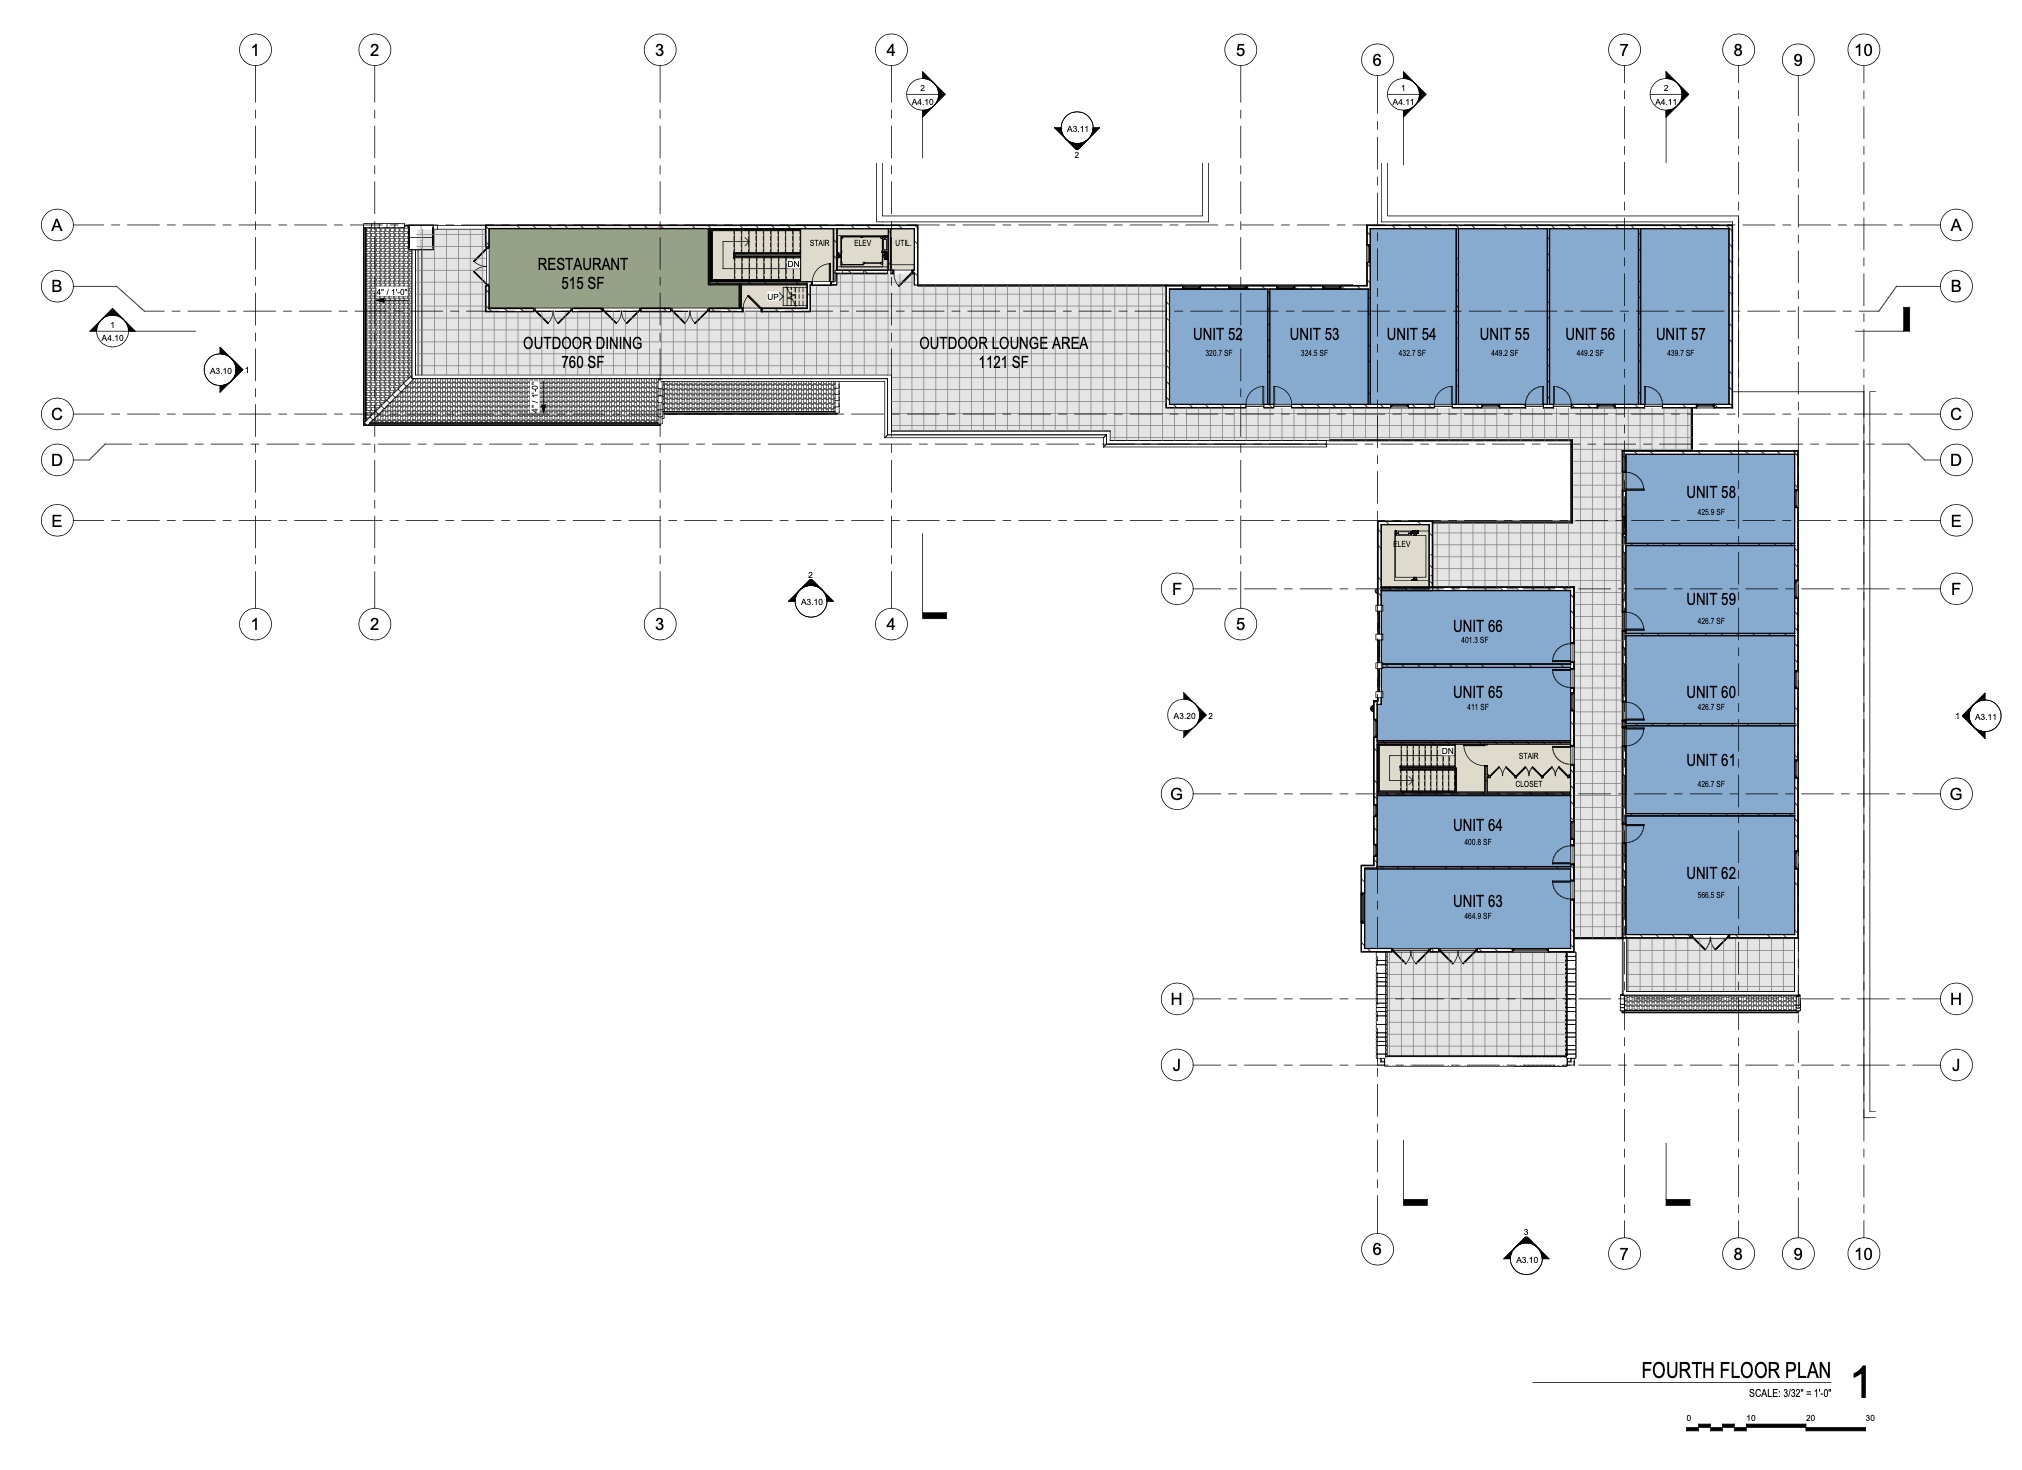 20230407-santa-barbara-centre-tenant-table-and-site-plan-1900px